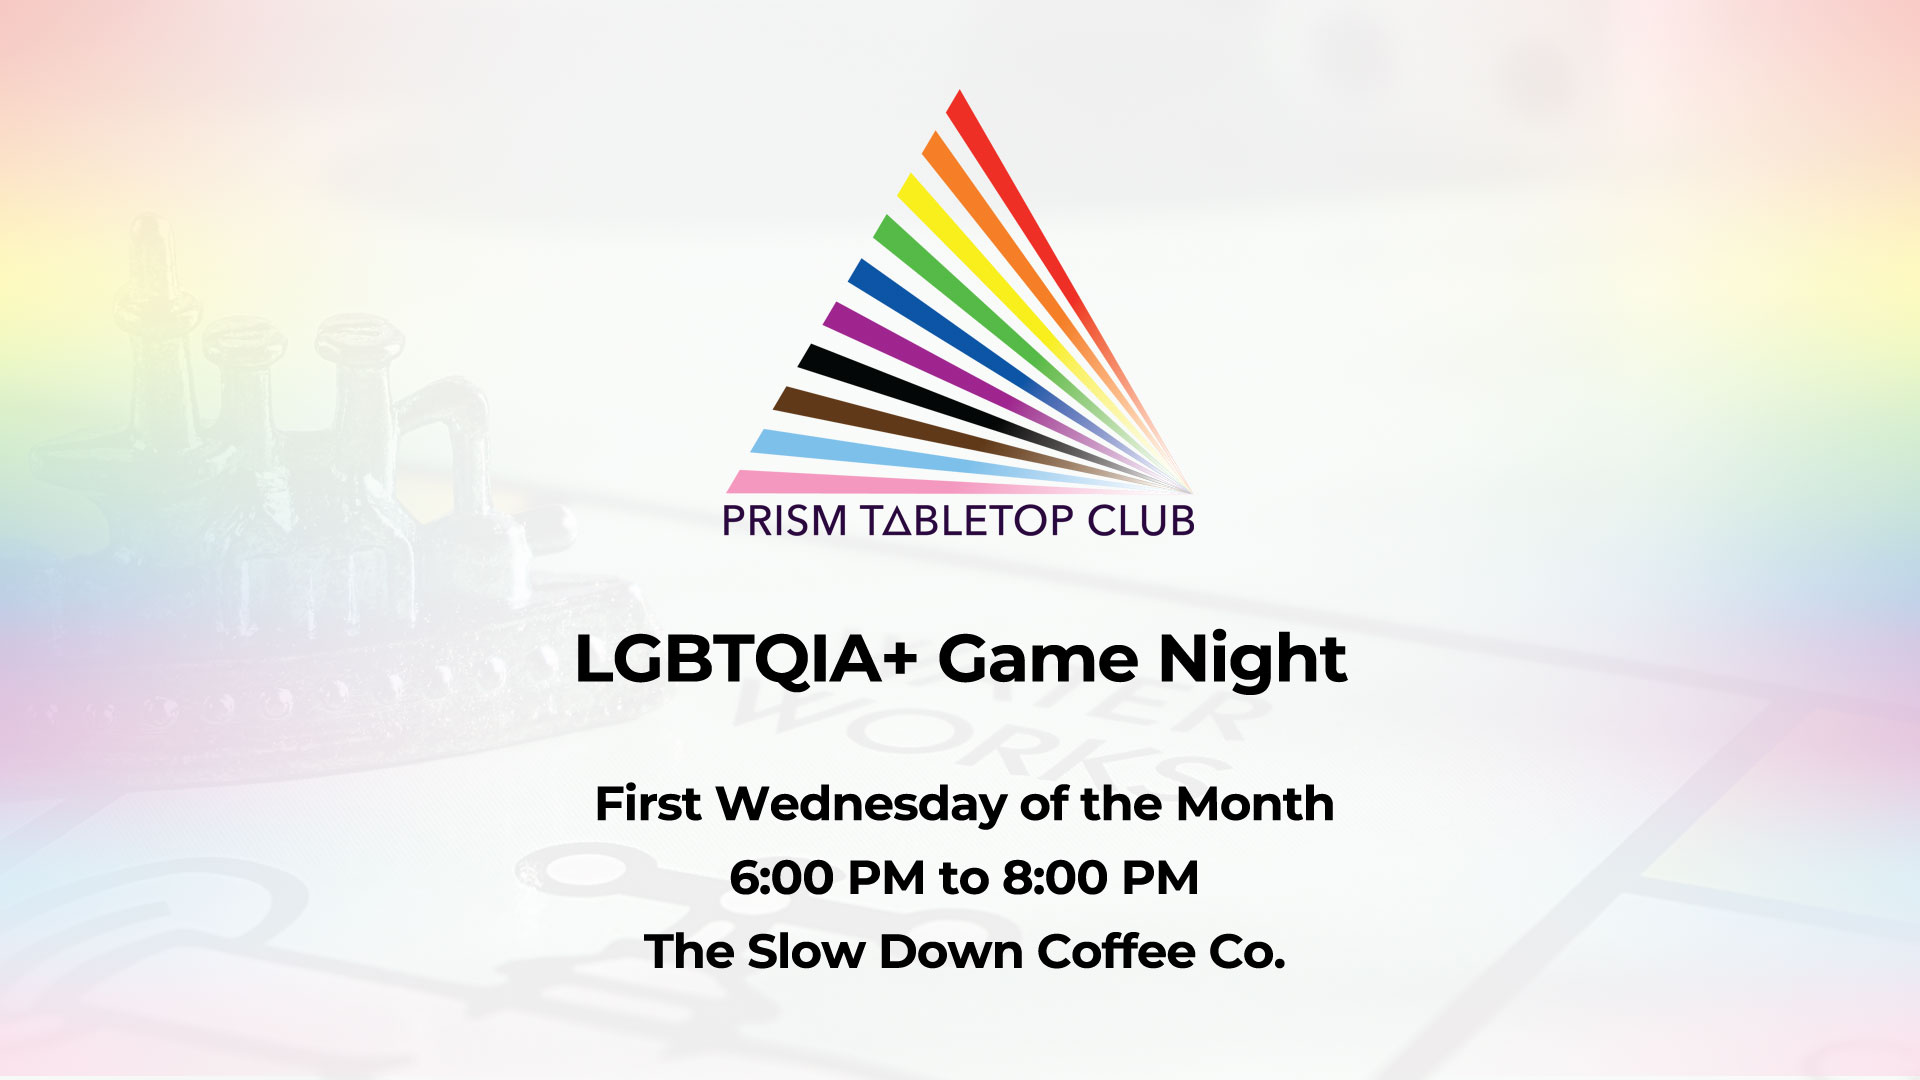 Prism Tabletop Club LGBTQIA+ Game Night Board Game Meet Up